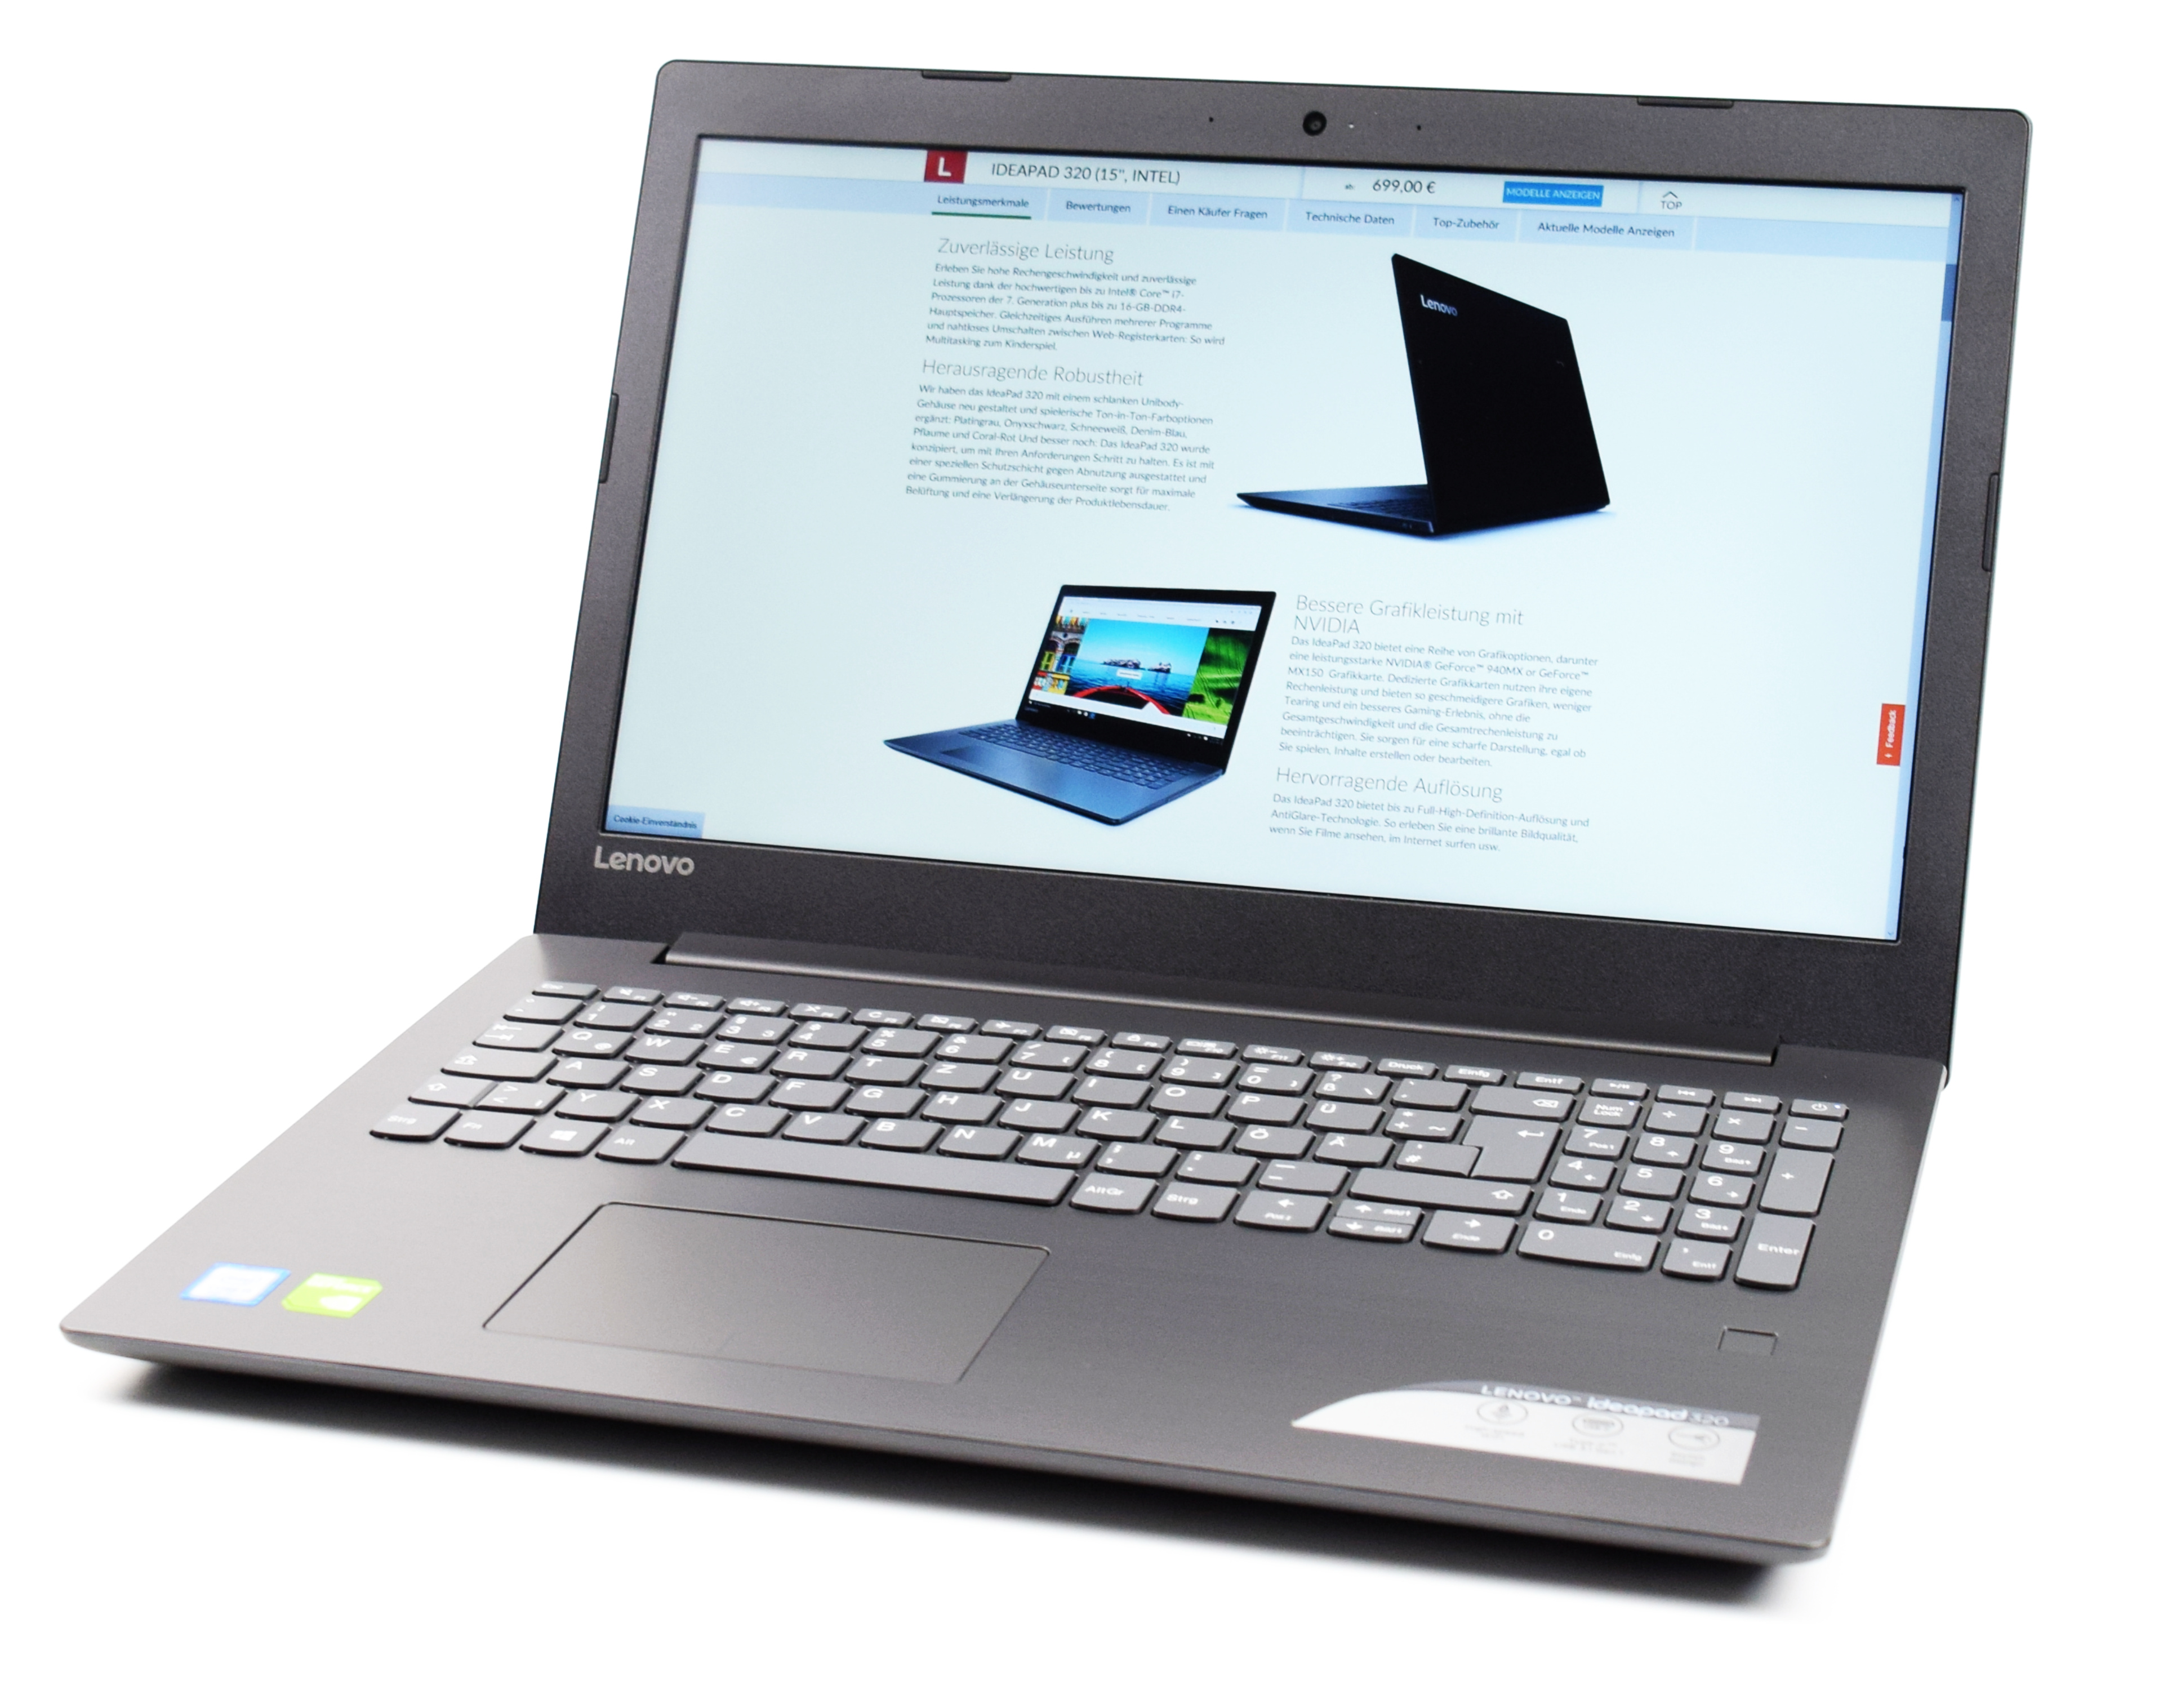 Lenovo IdeaPad 320-15IKBRN (8250U, MX150, FHD) Laptop Review 